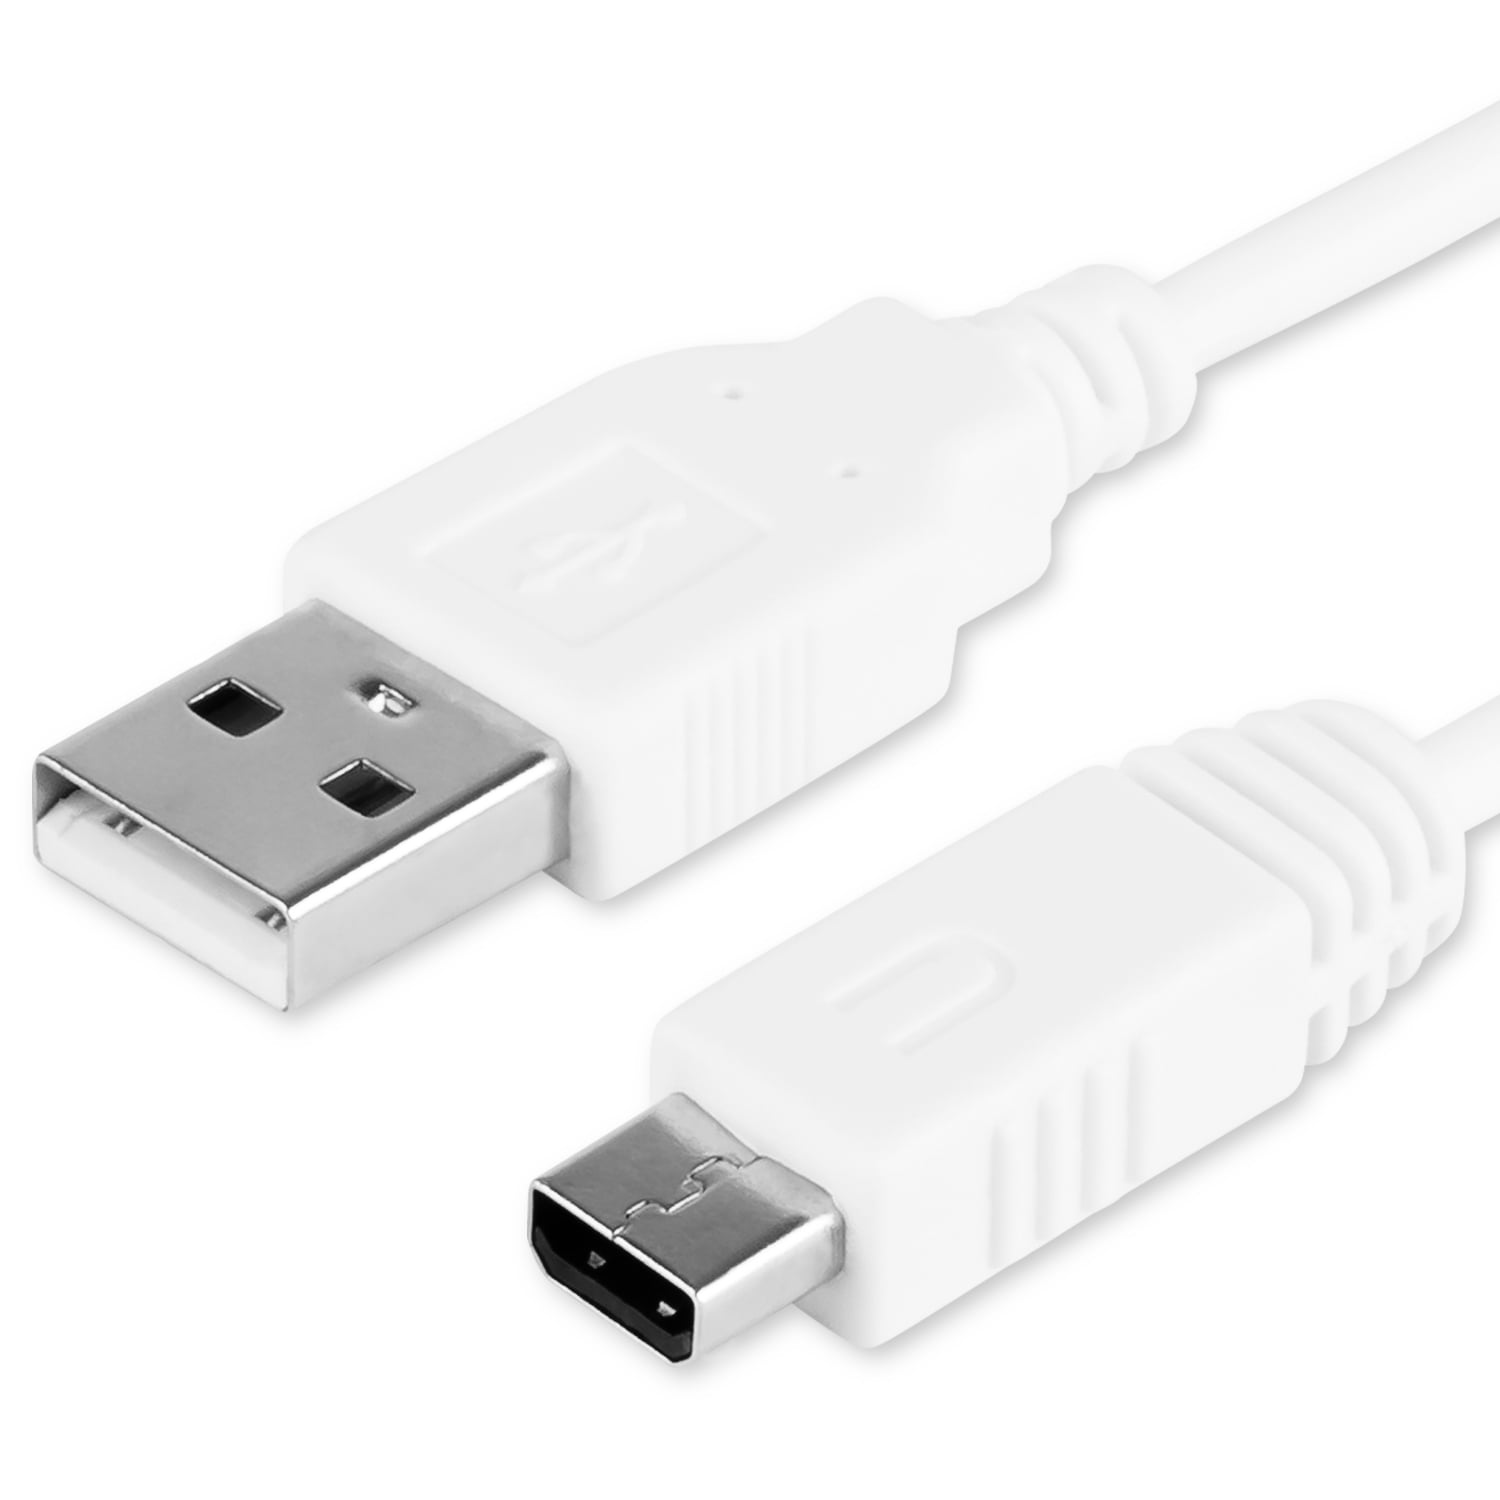 Fosmon Nintendo Wii U Gamepad Usb Charge Charging Cable Cord Wire 10ft White Walmart Com Walmart Com